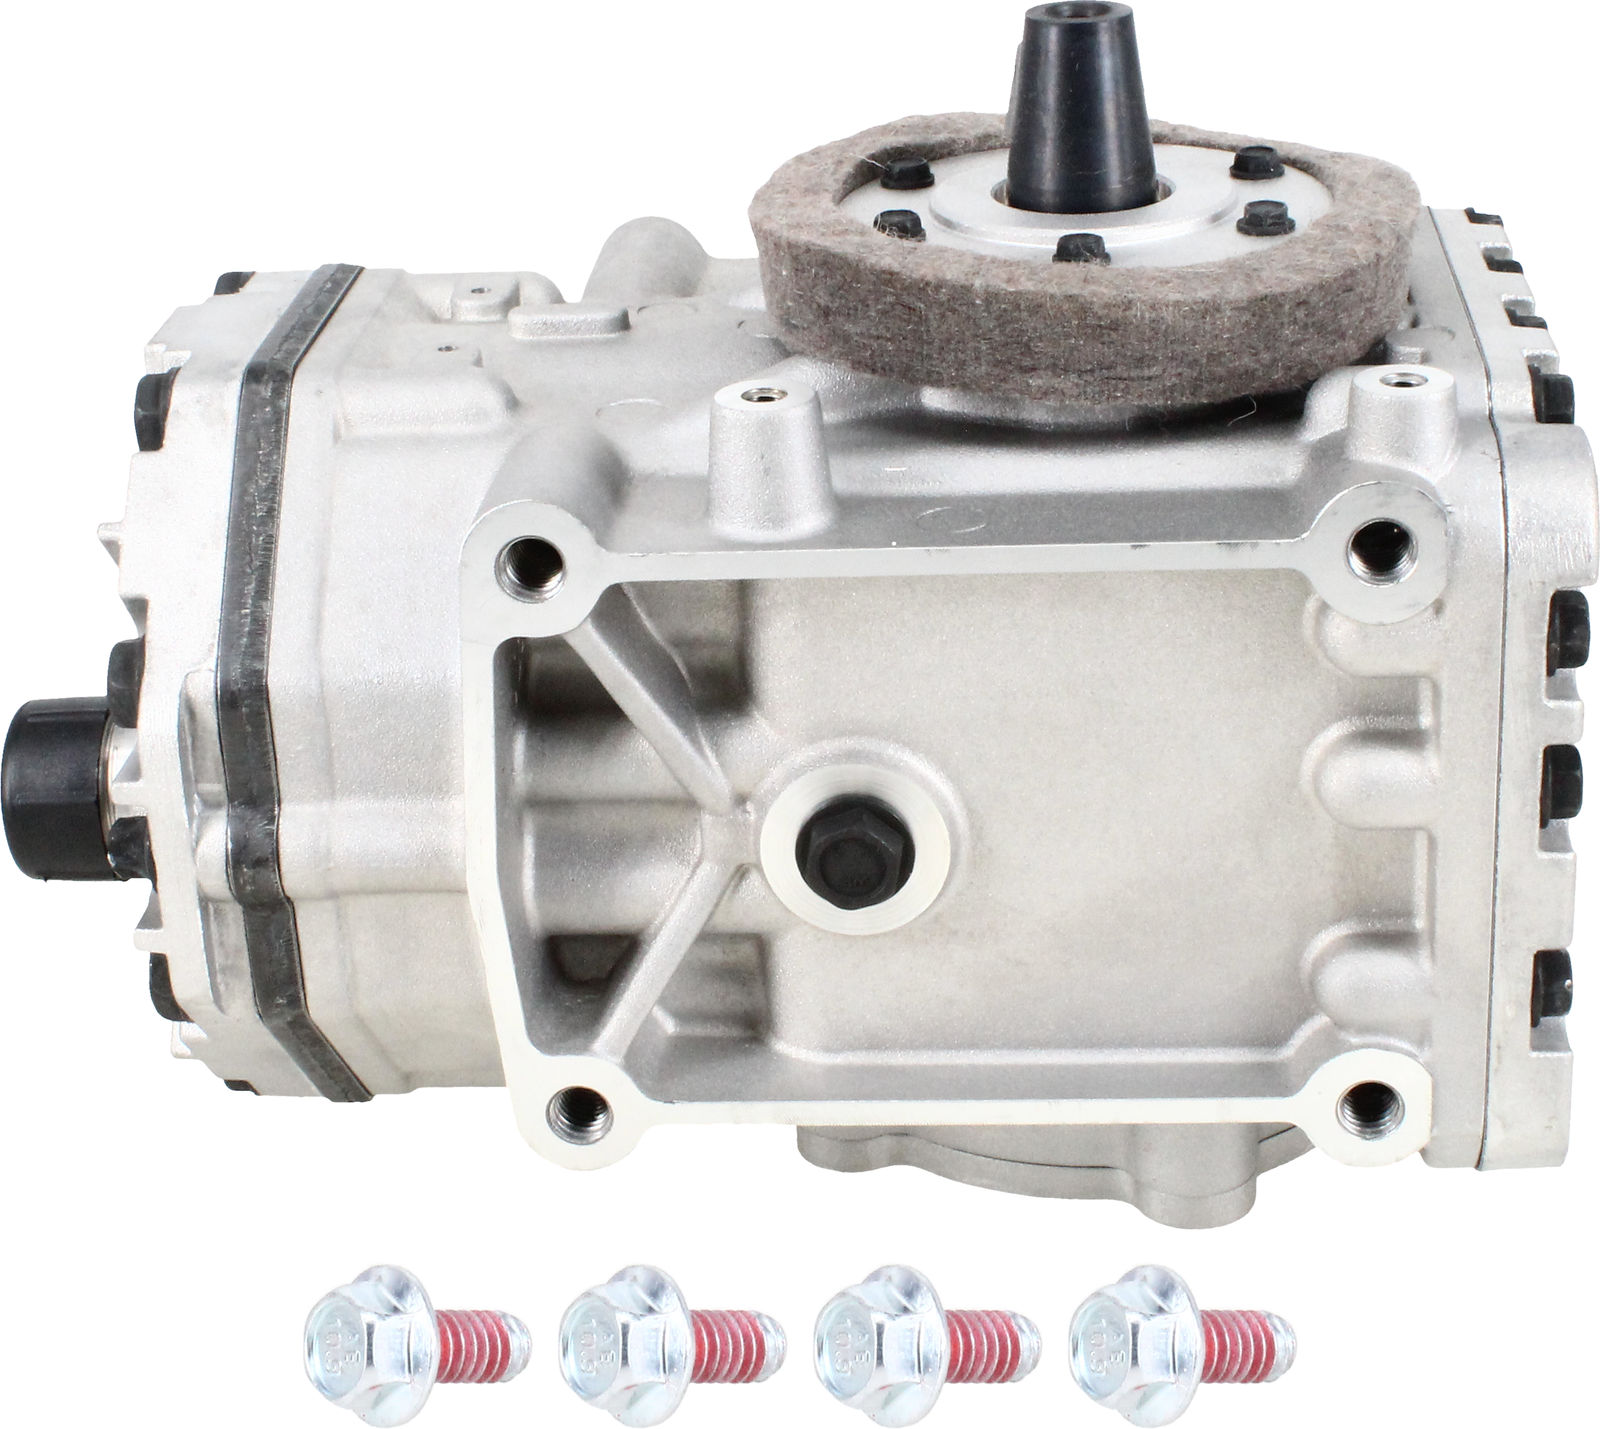 LH Suction Compressor 500-222 fits Several Universal Models